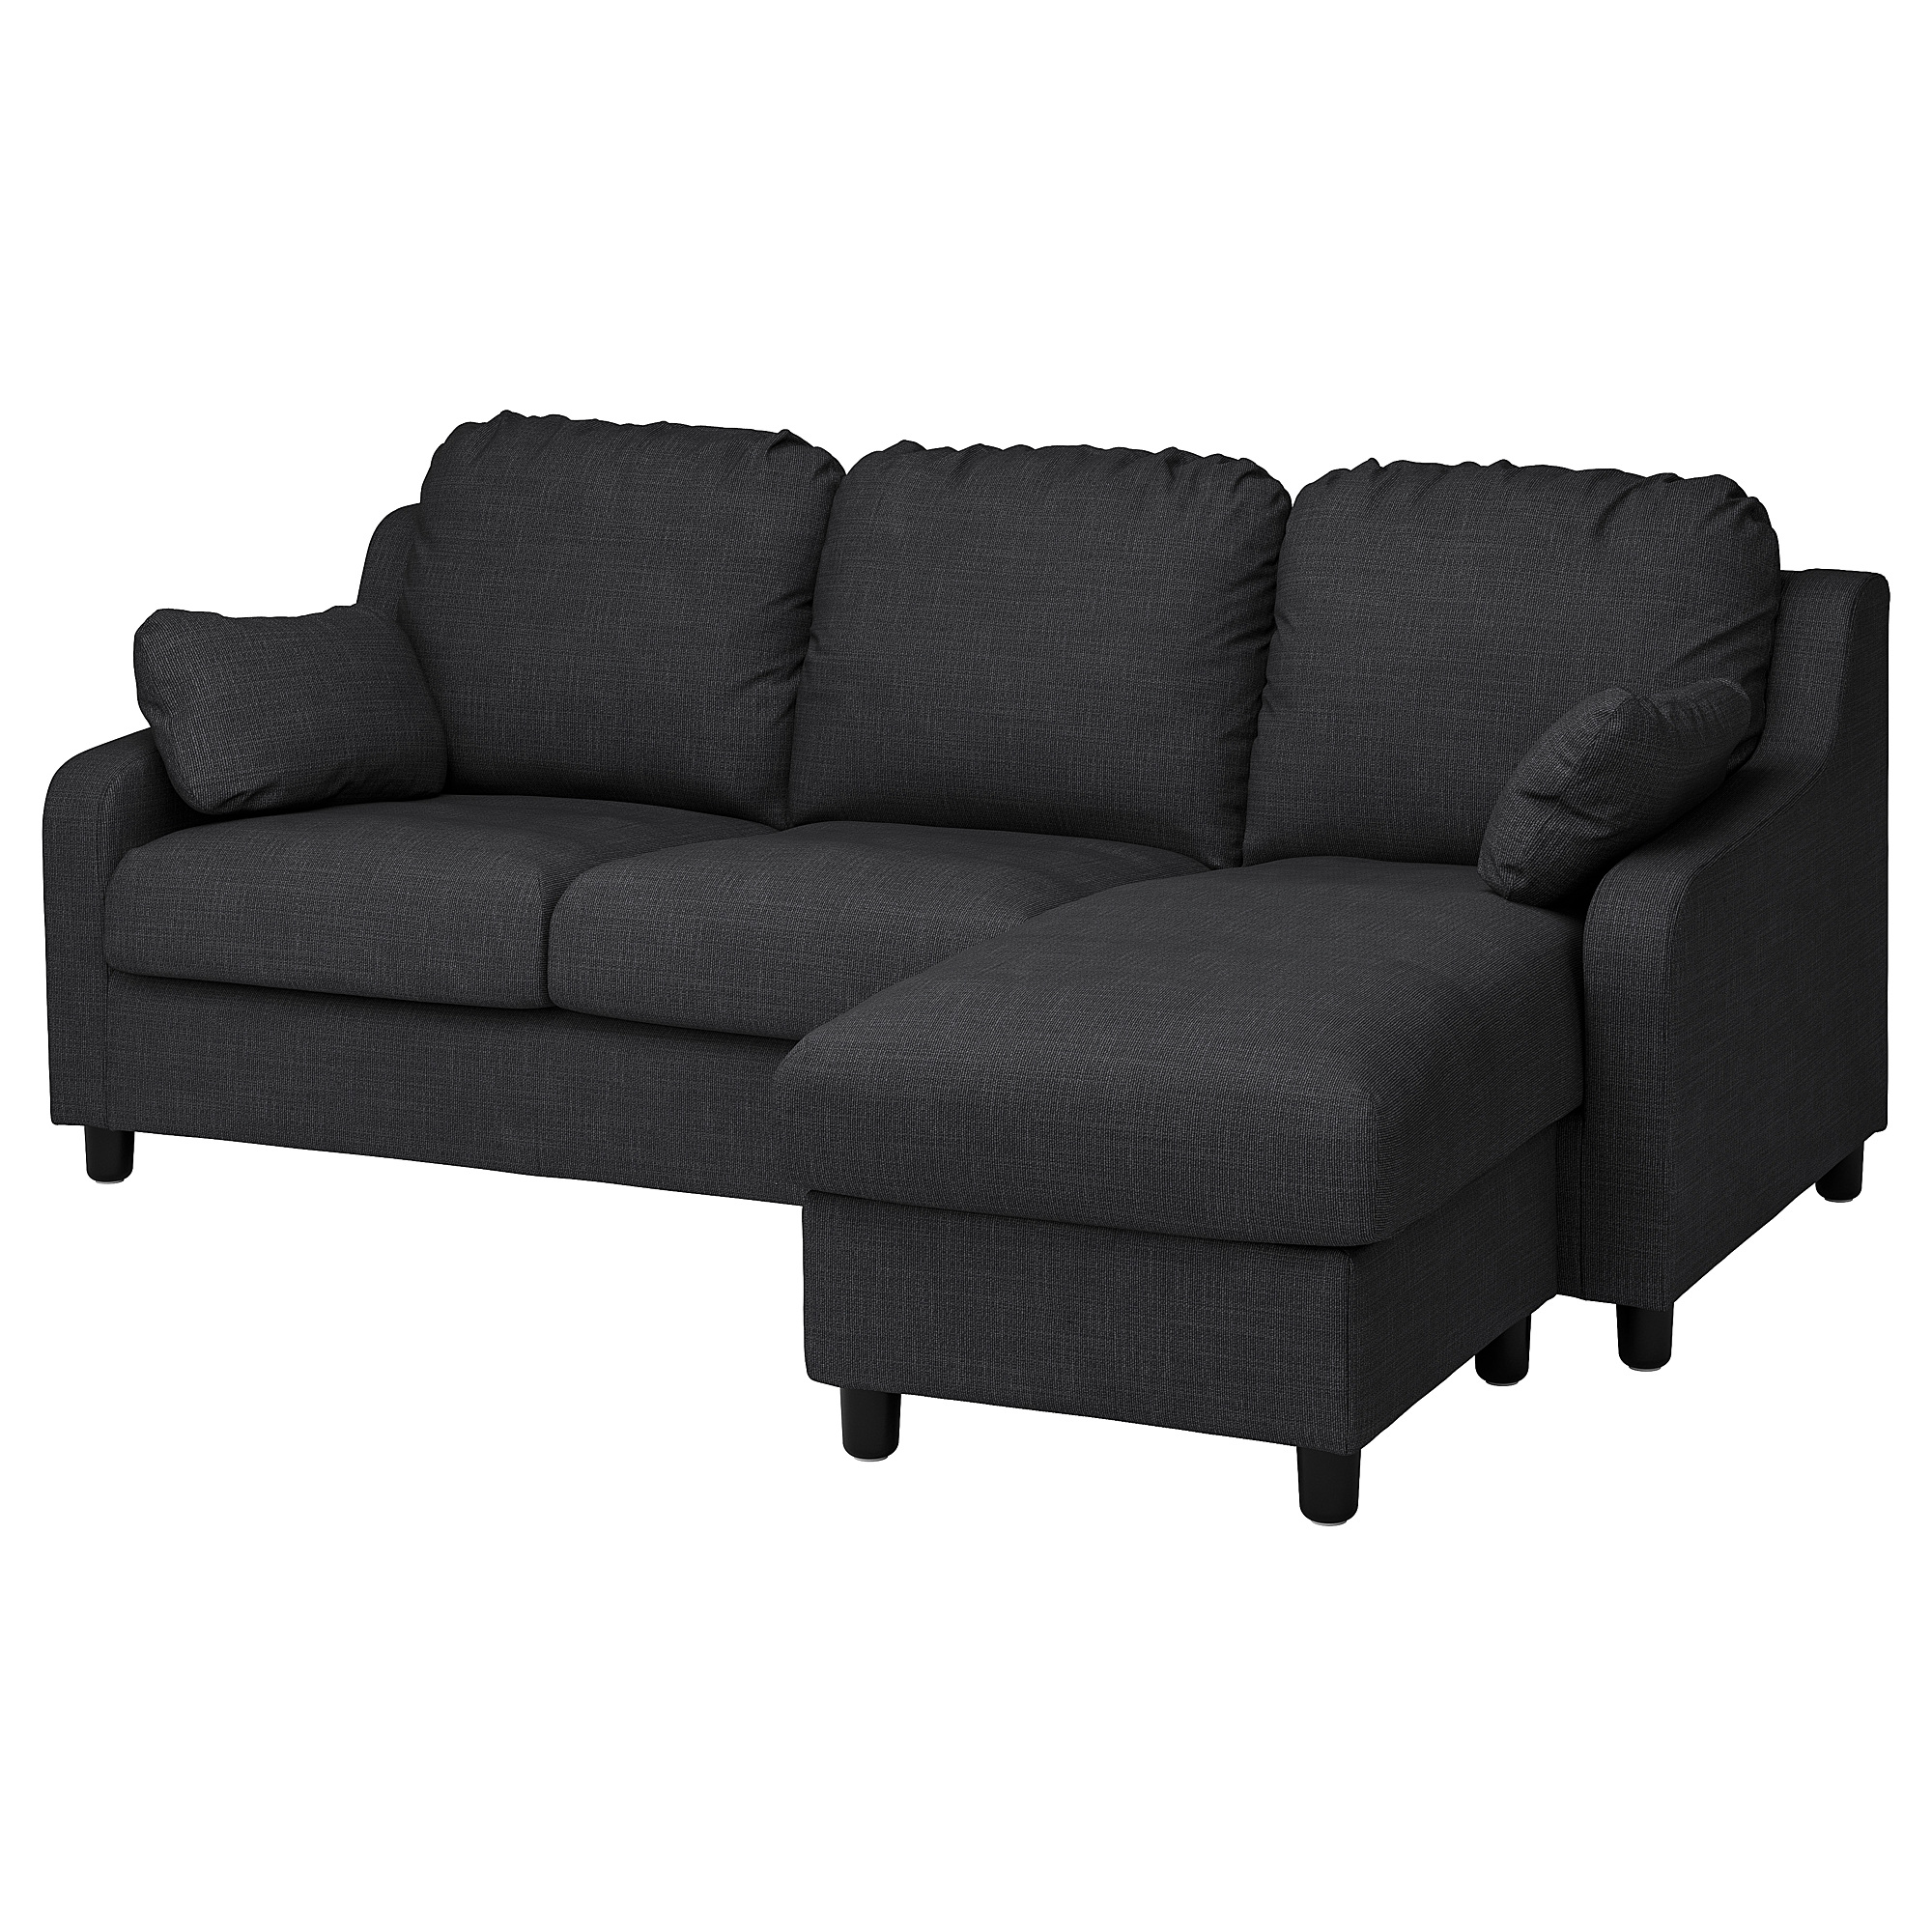 VINLIDEN 3-seat sofa with chaise longue